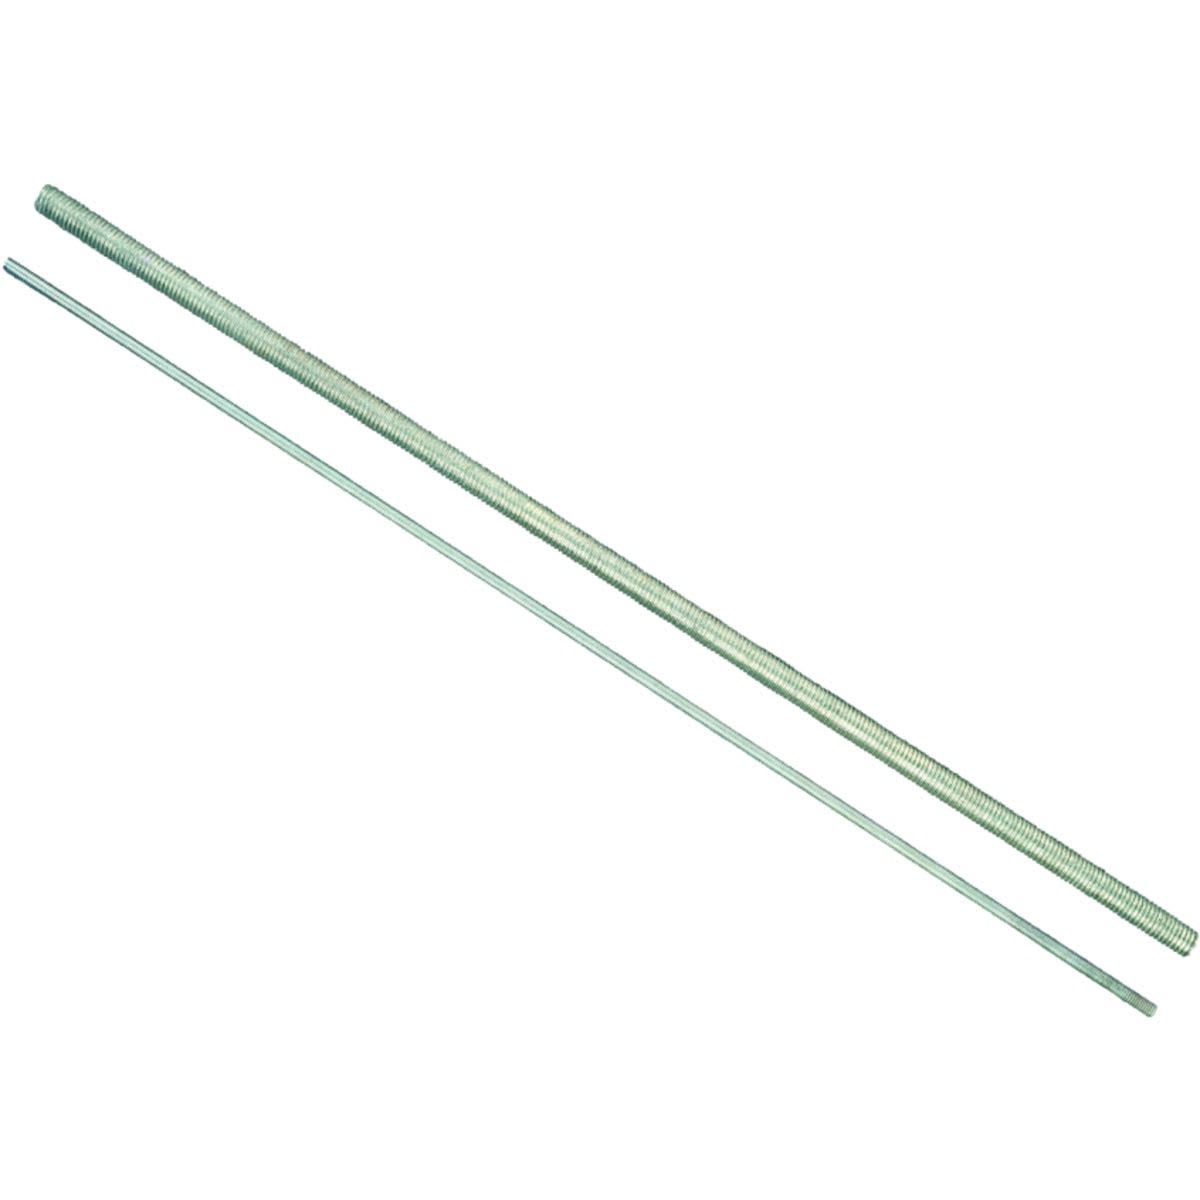 Fischer Principle Threaded Rods - M12 - Pack